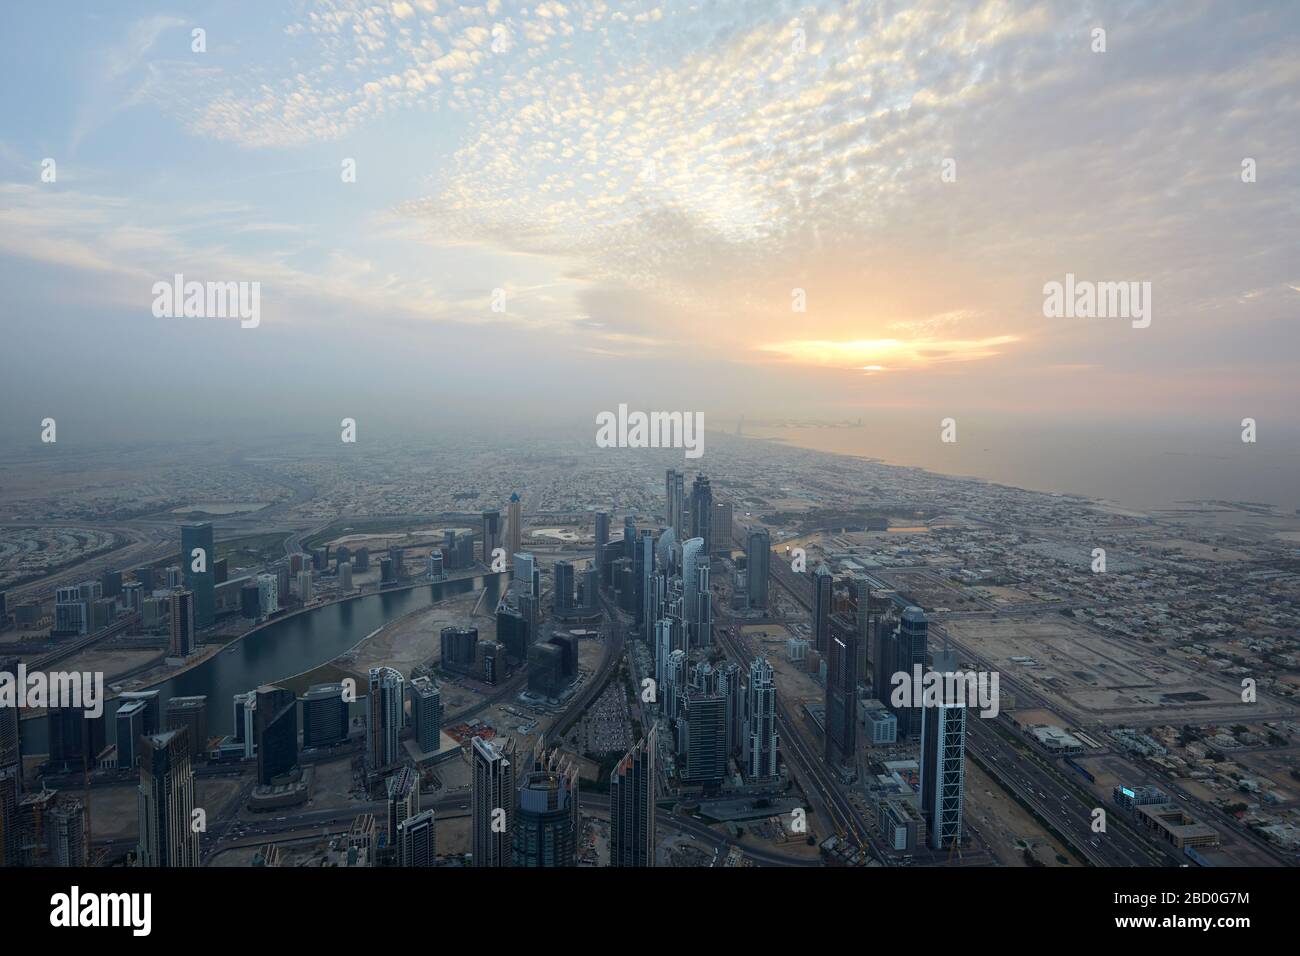 DUBAI, UNITED ARAB EMIRATES - NOVEMBER 19, 2019: Dubai city high angle view with skyscrapers at dusk seen from Burj Khalifa Stock Photo